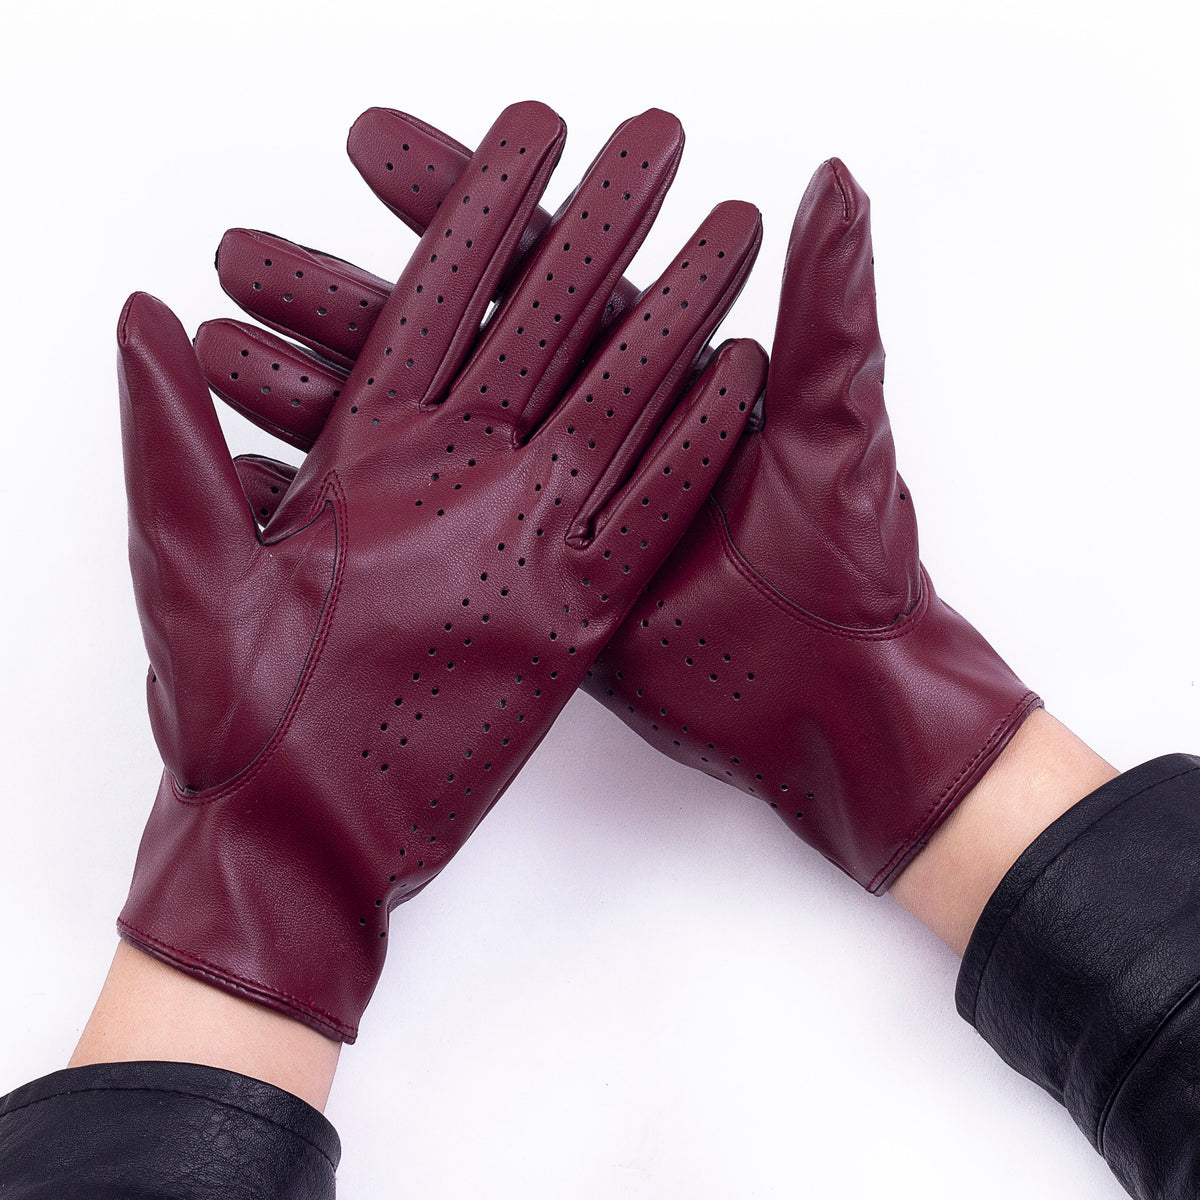 Calaméo - Brown Leather Driving Gloves Flg 1017 En